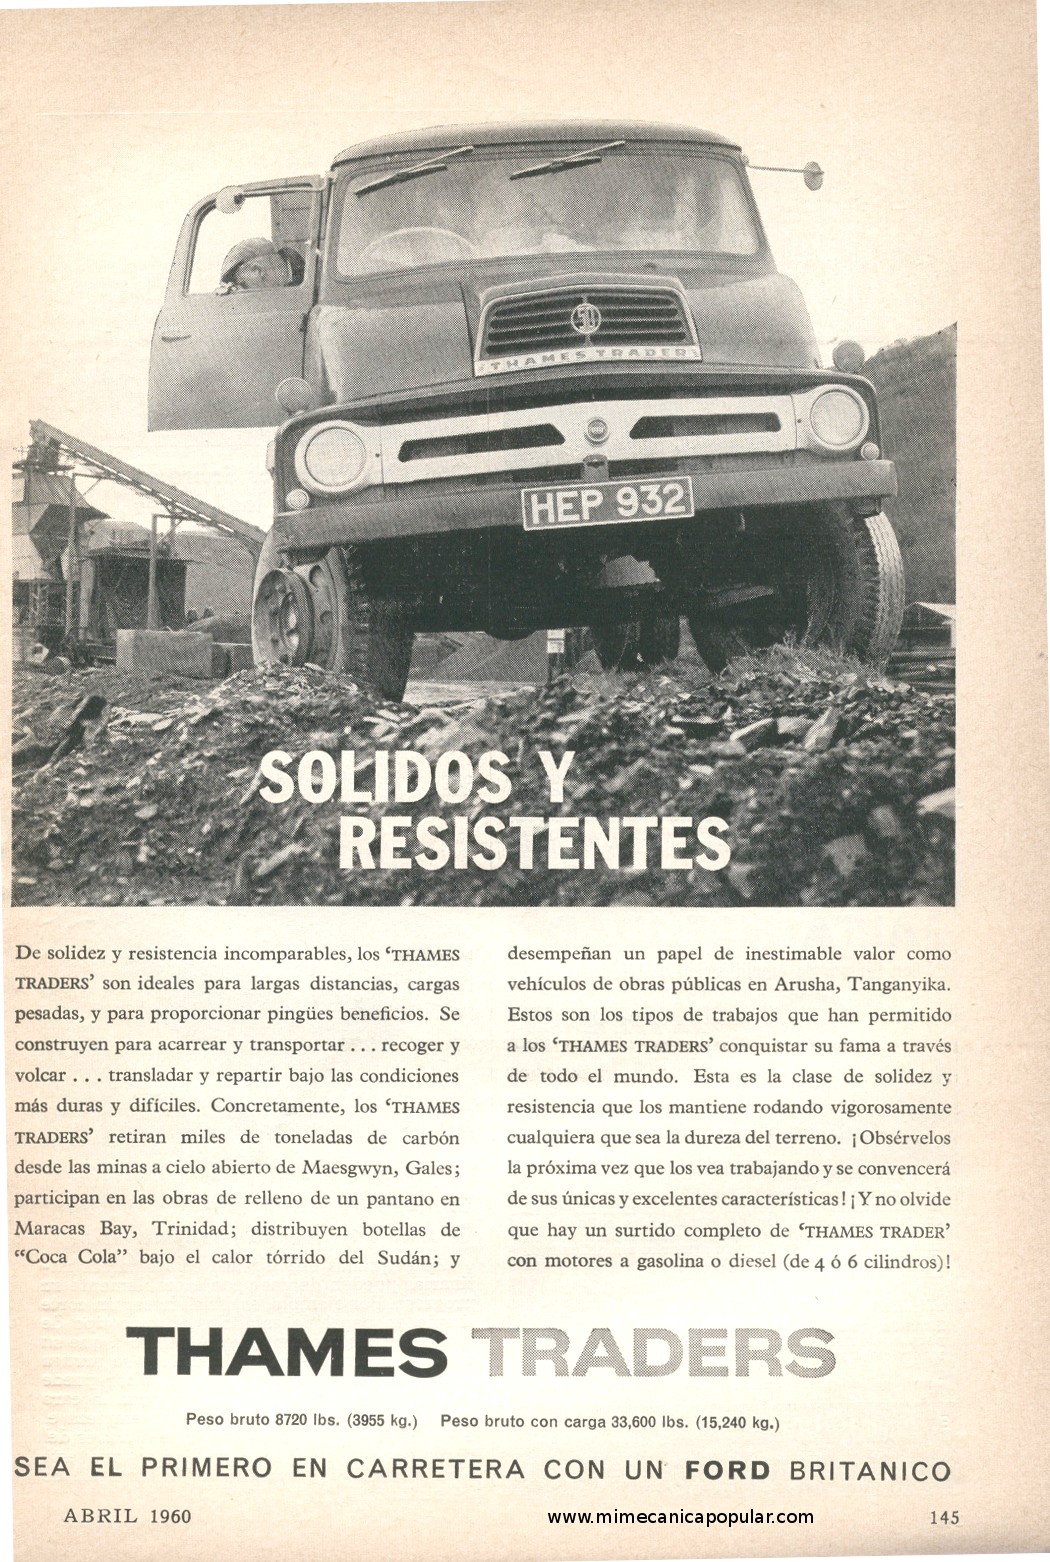 Publicidad - Camiones Ford Thames Traders - Abril 1960